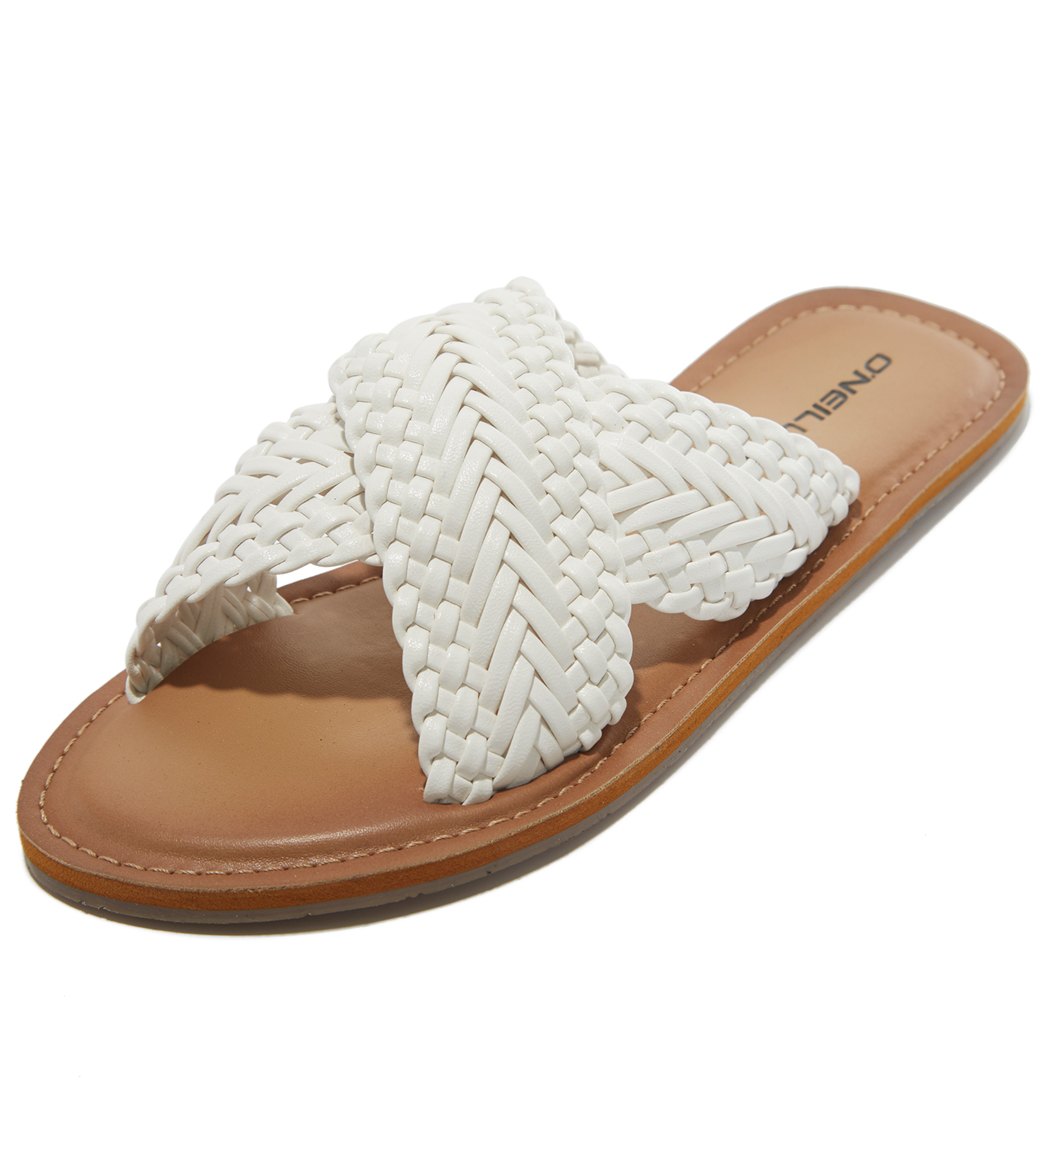 O'neill Women's Palm Springs Slides Sandals - White 9 - Swimoutlet.com